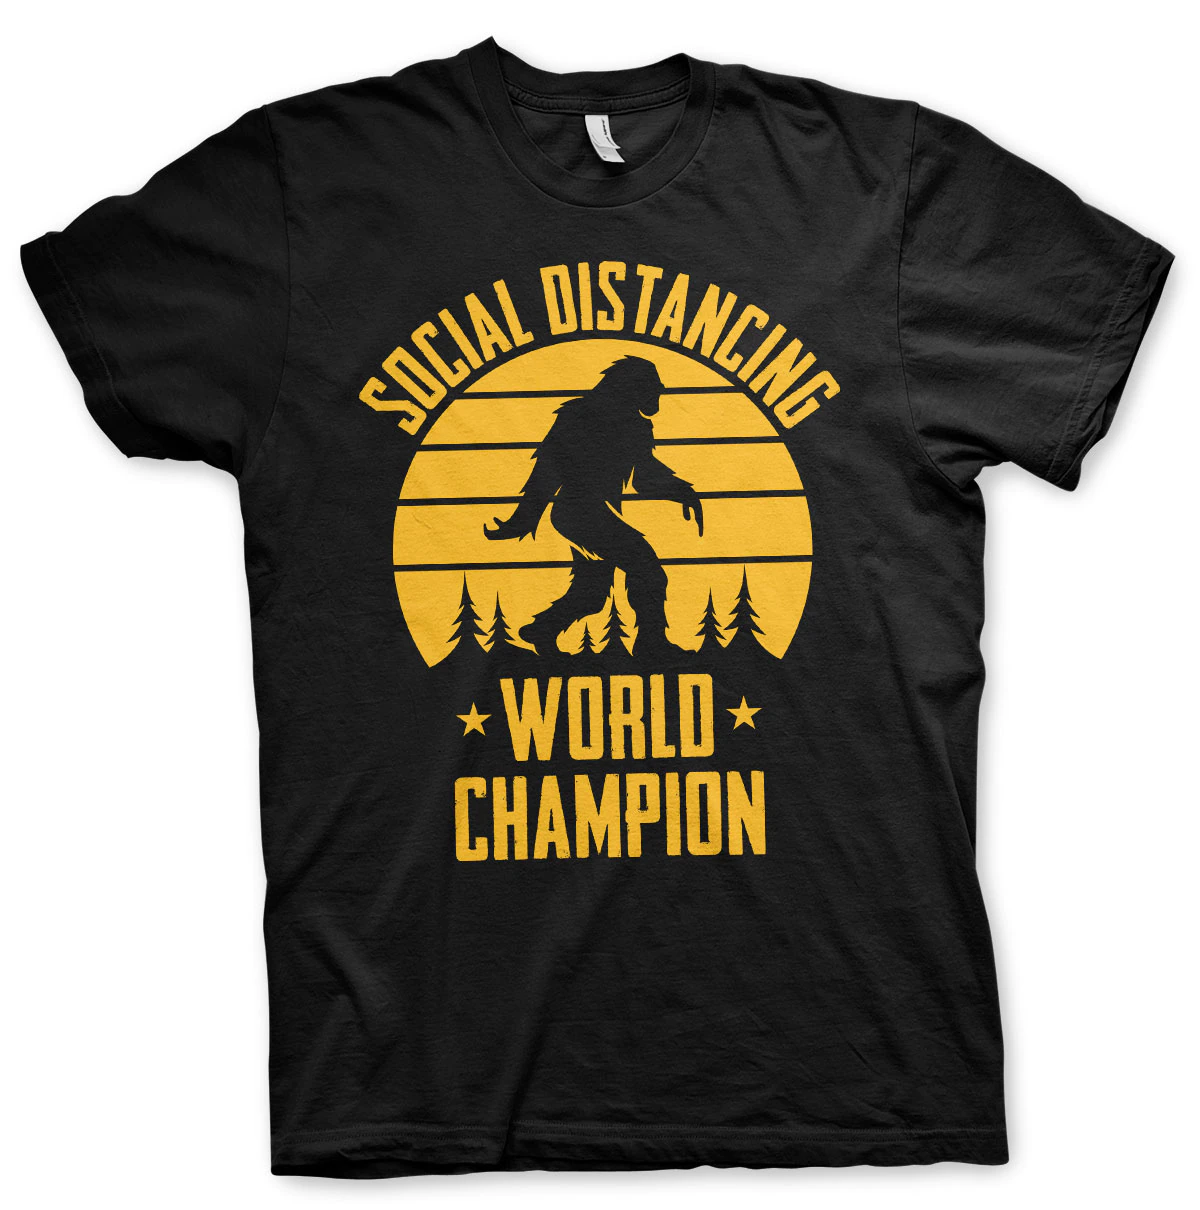 Social Distancing World Champion - T-Shirt